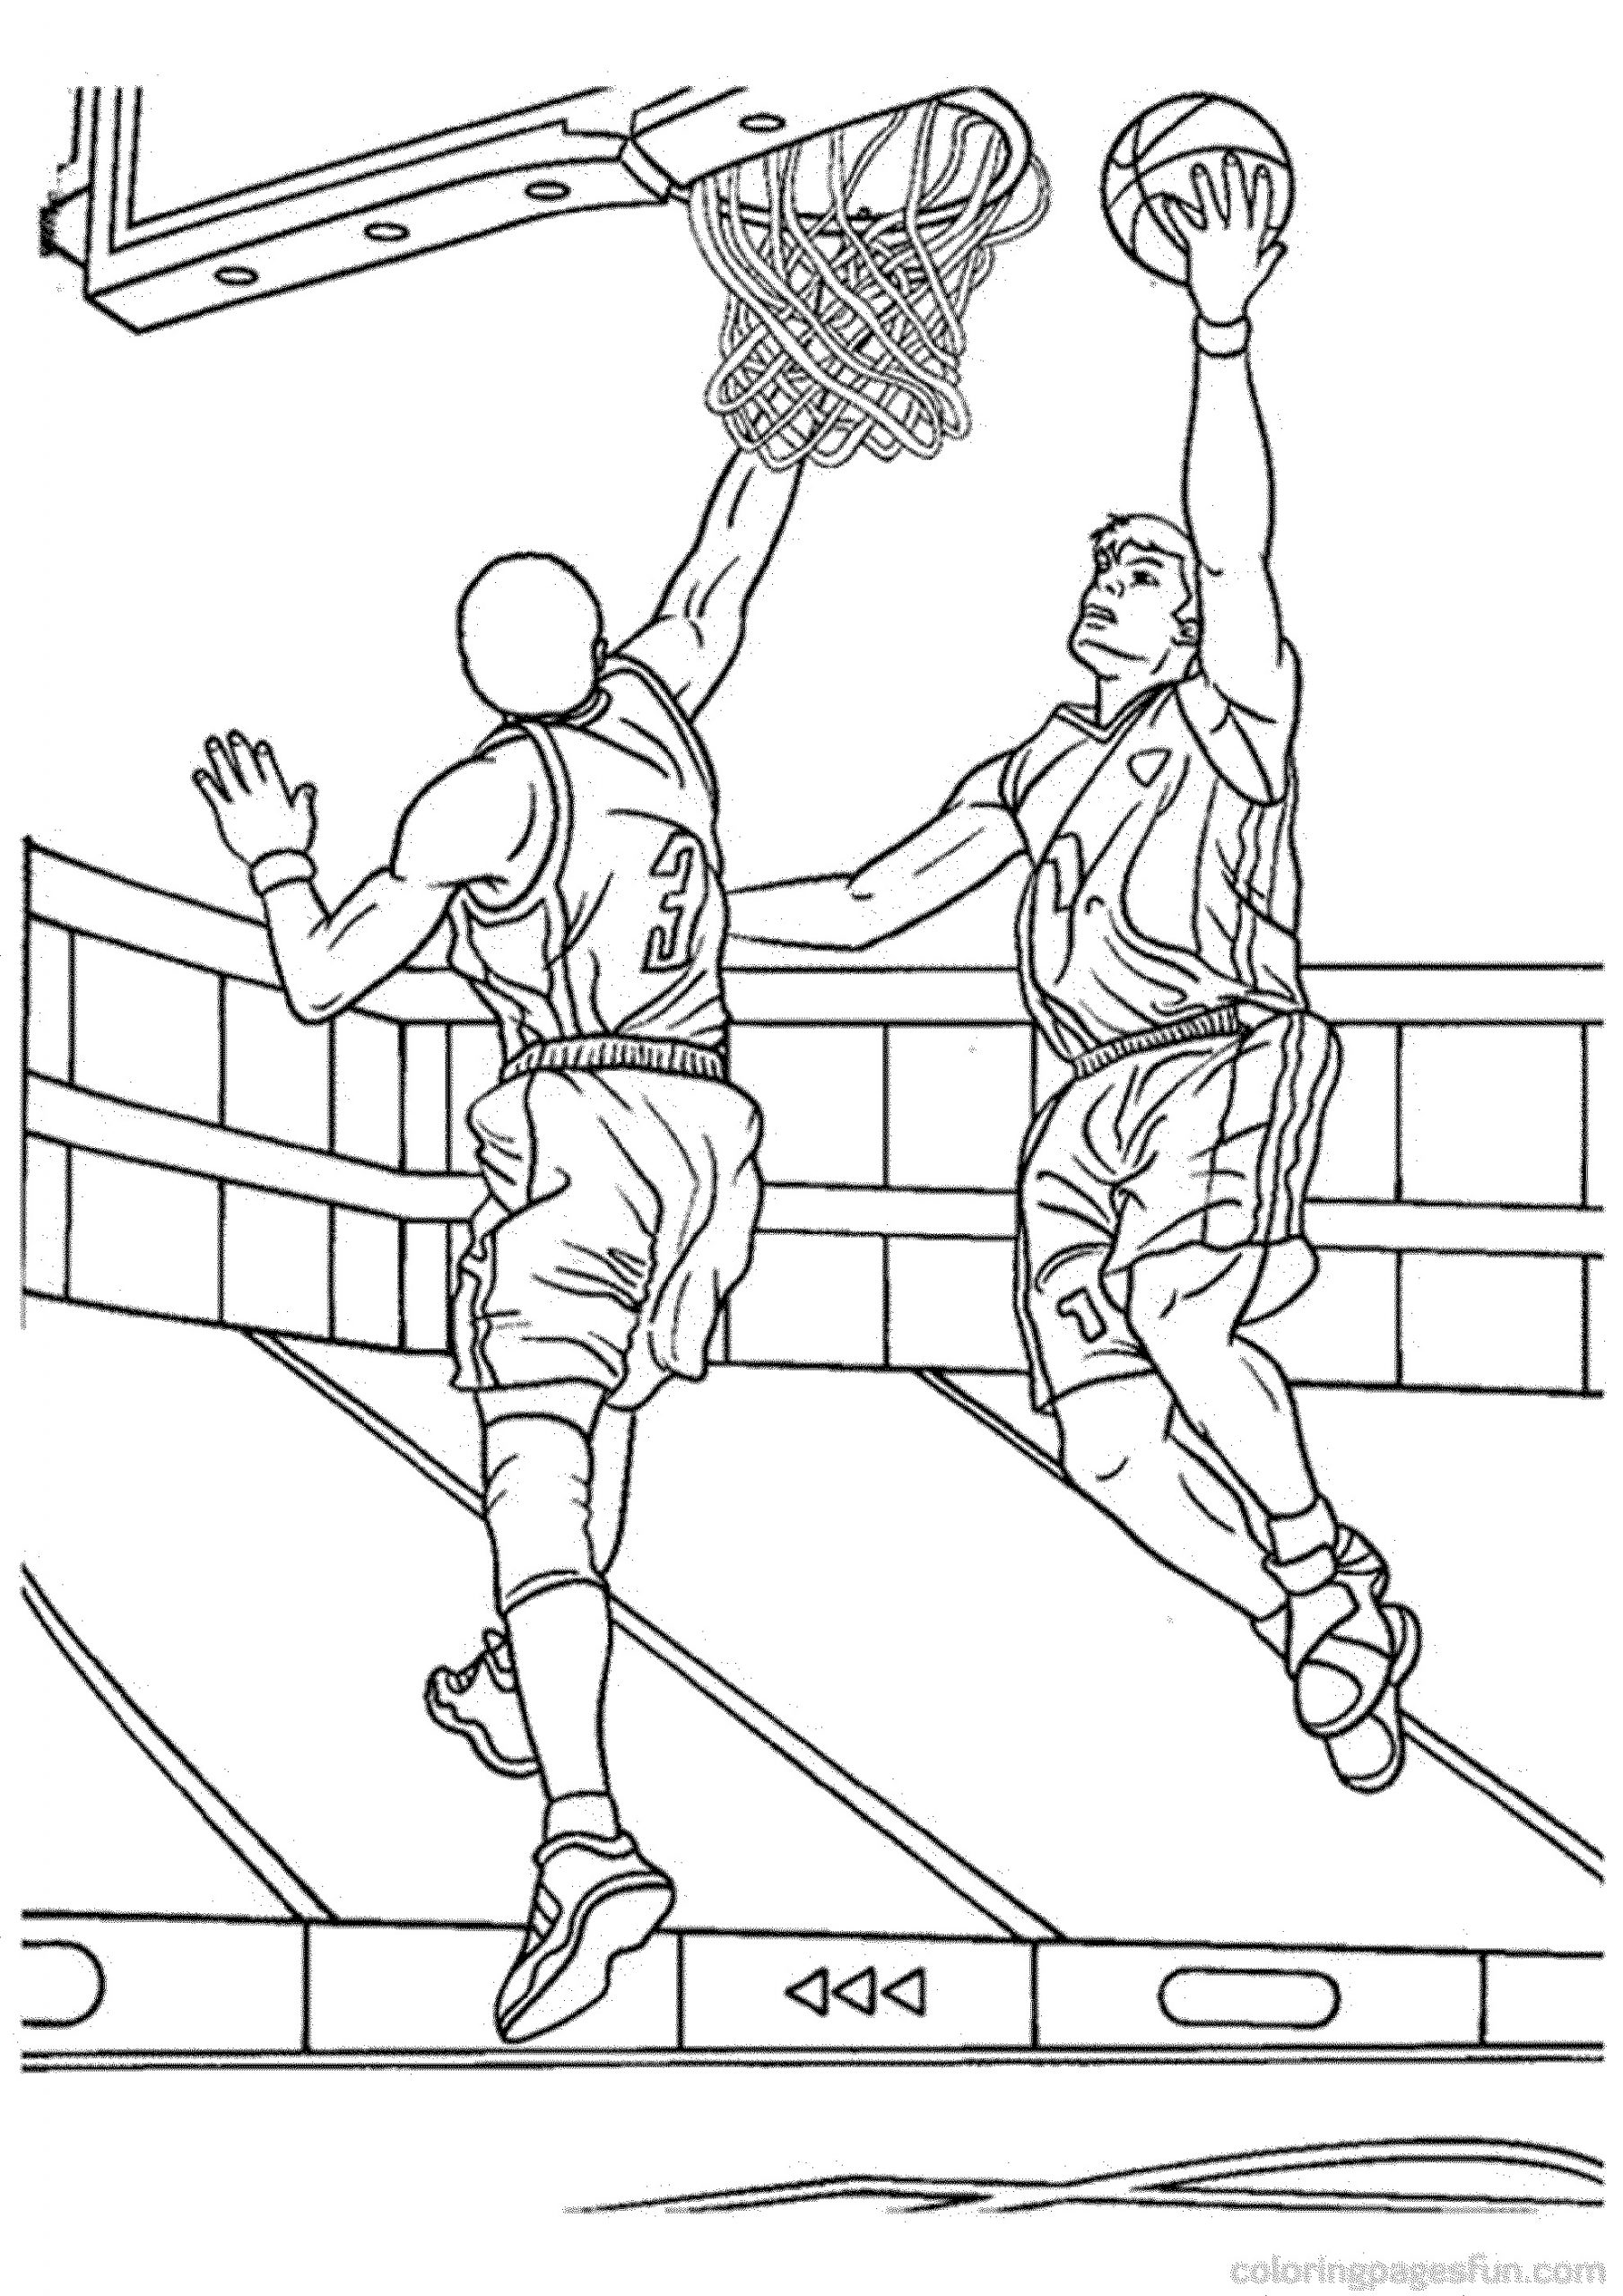 Printable Basketball Color Pages